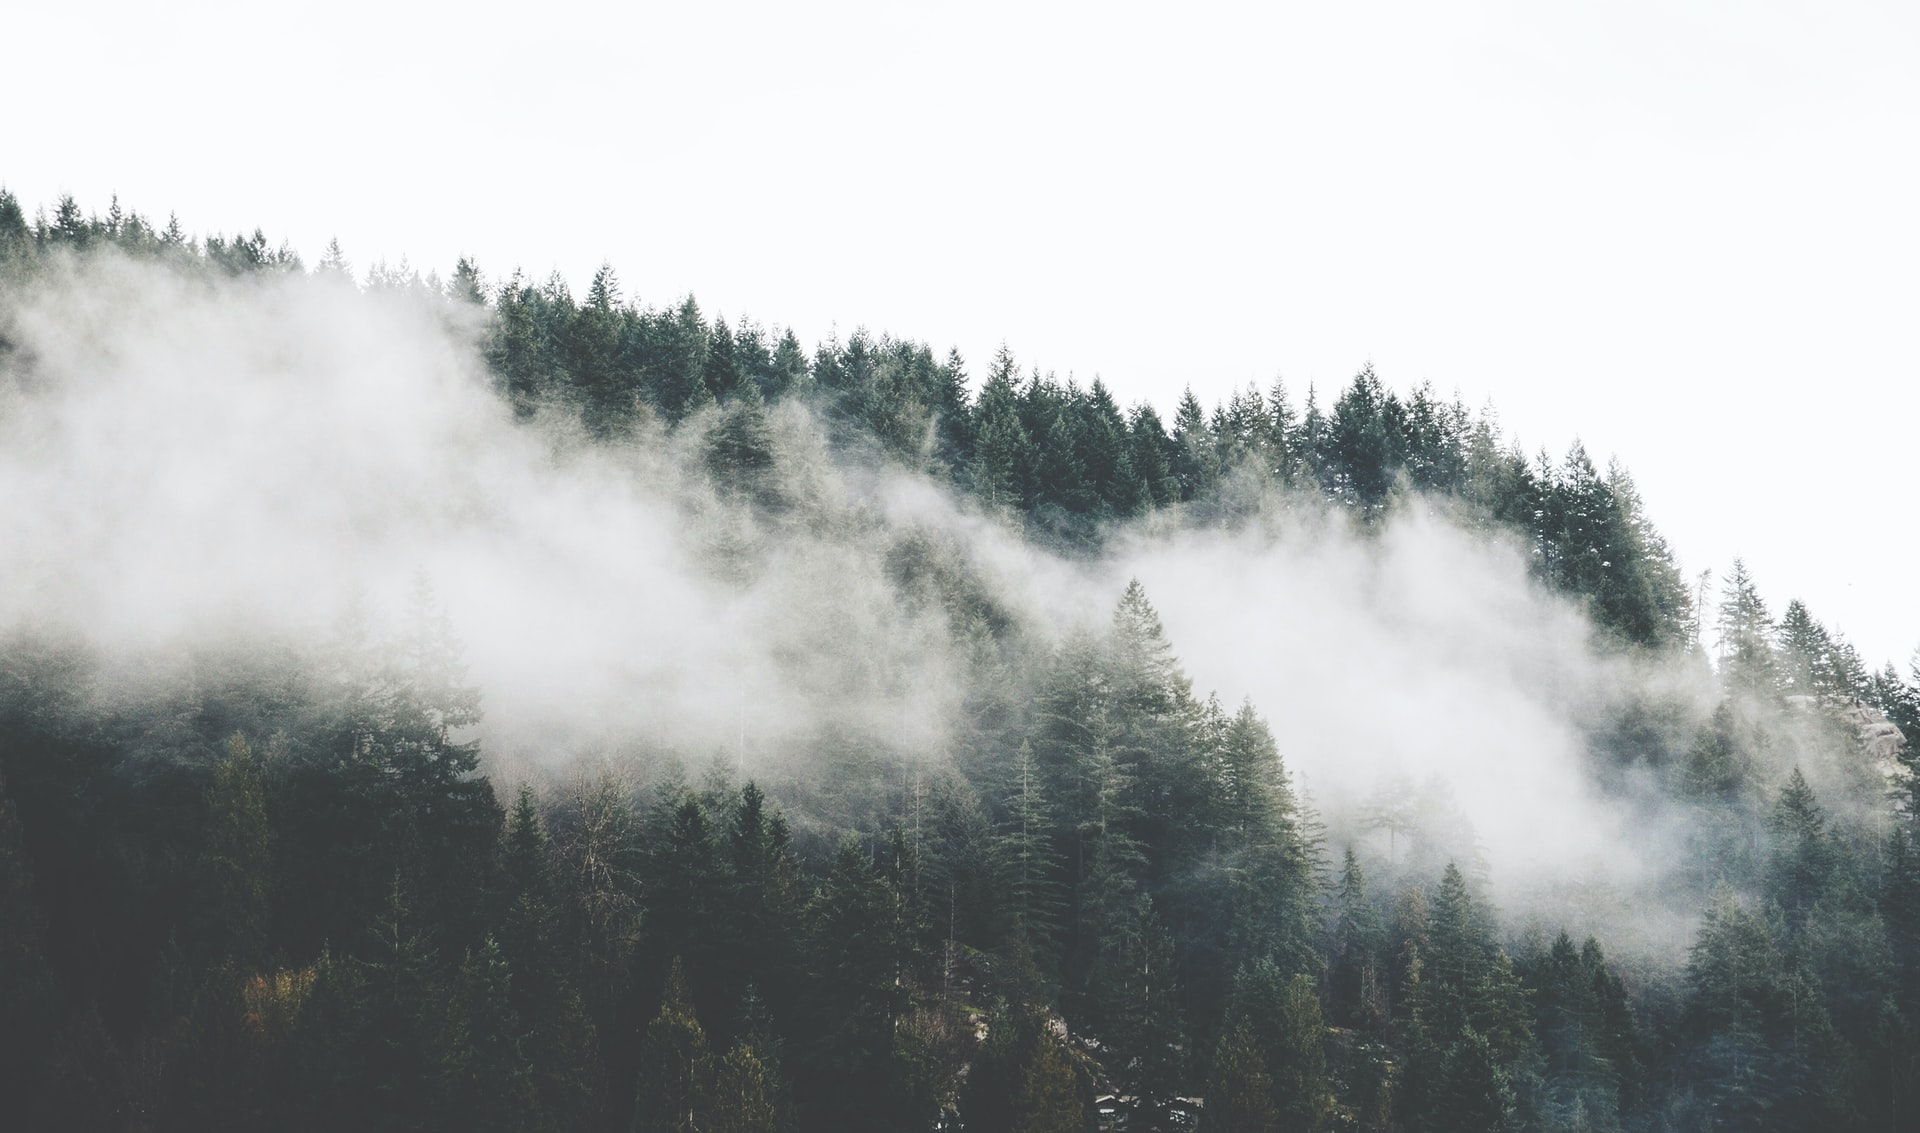 Fog settled in between dark green evergreen trees on a mountainside